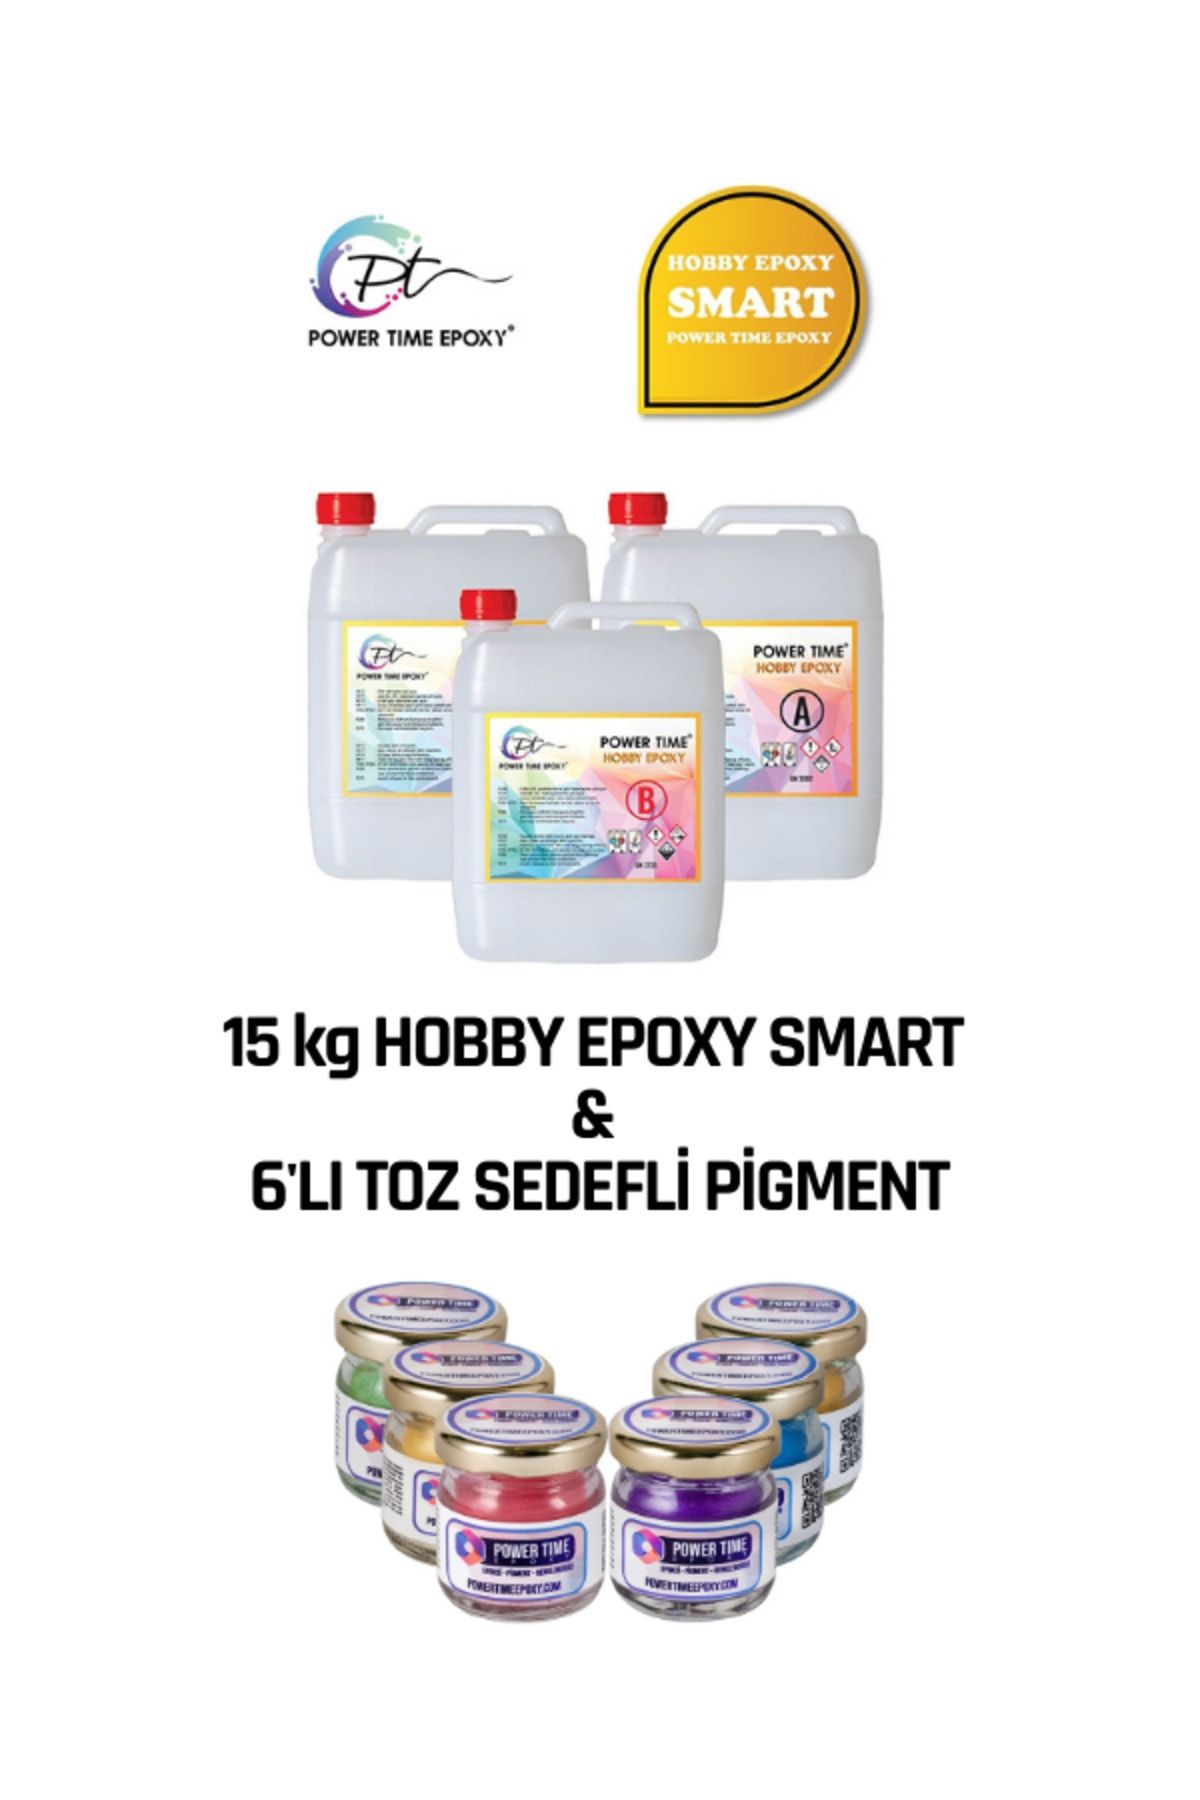 POWER TIME EPOXY 15 Kg Hobby Epoxy Smart + 6'lı Toz Sedefli Pigment Boya Seti/ Şeffaf Epoksi Reçine Ince Döküm